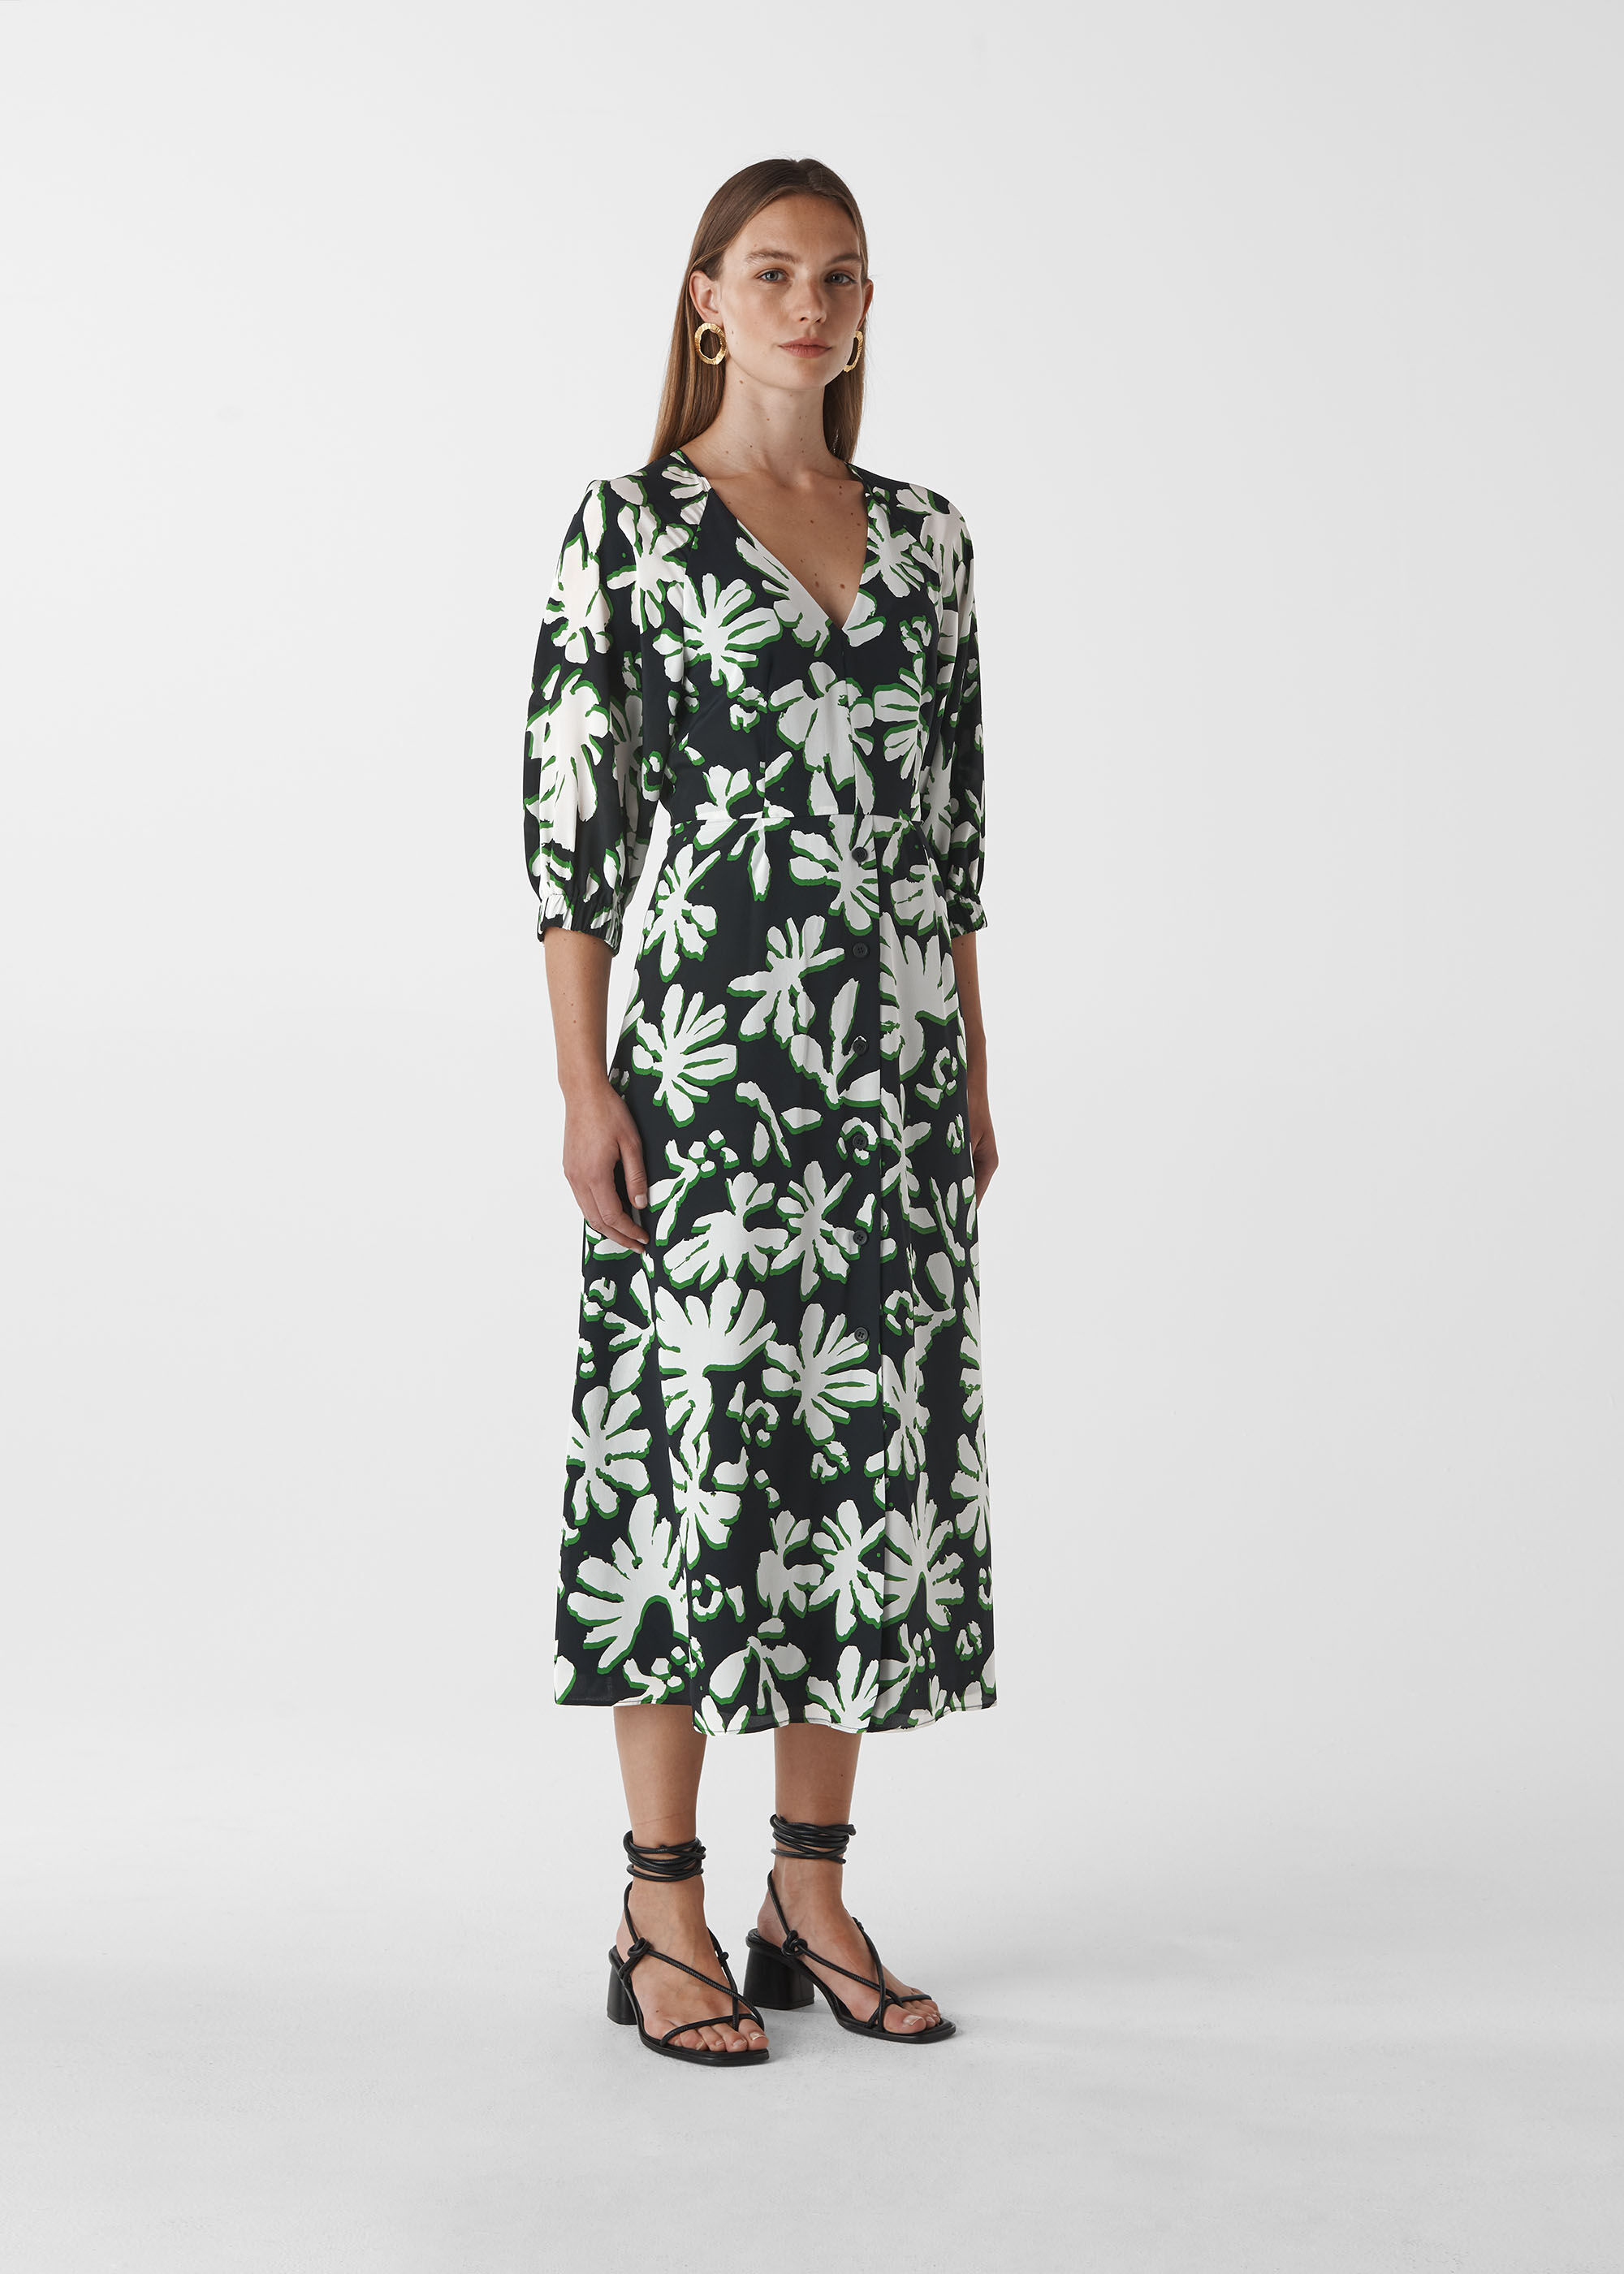 green palm leaf print dress